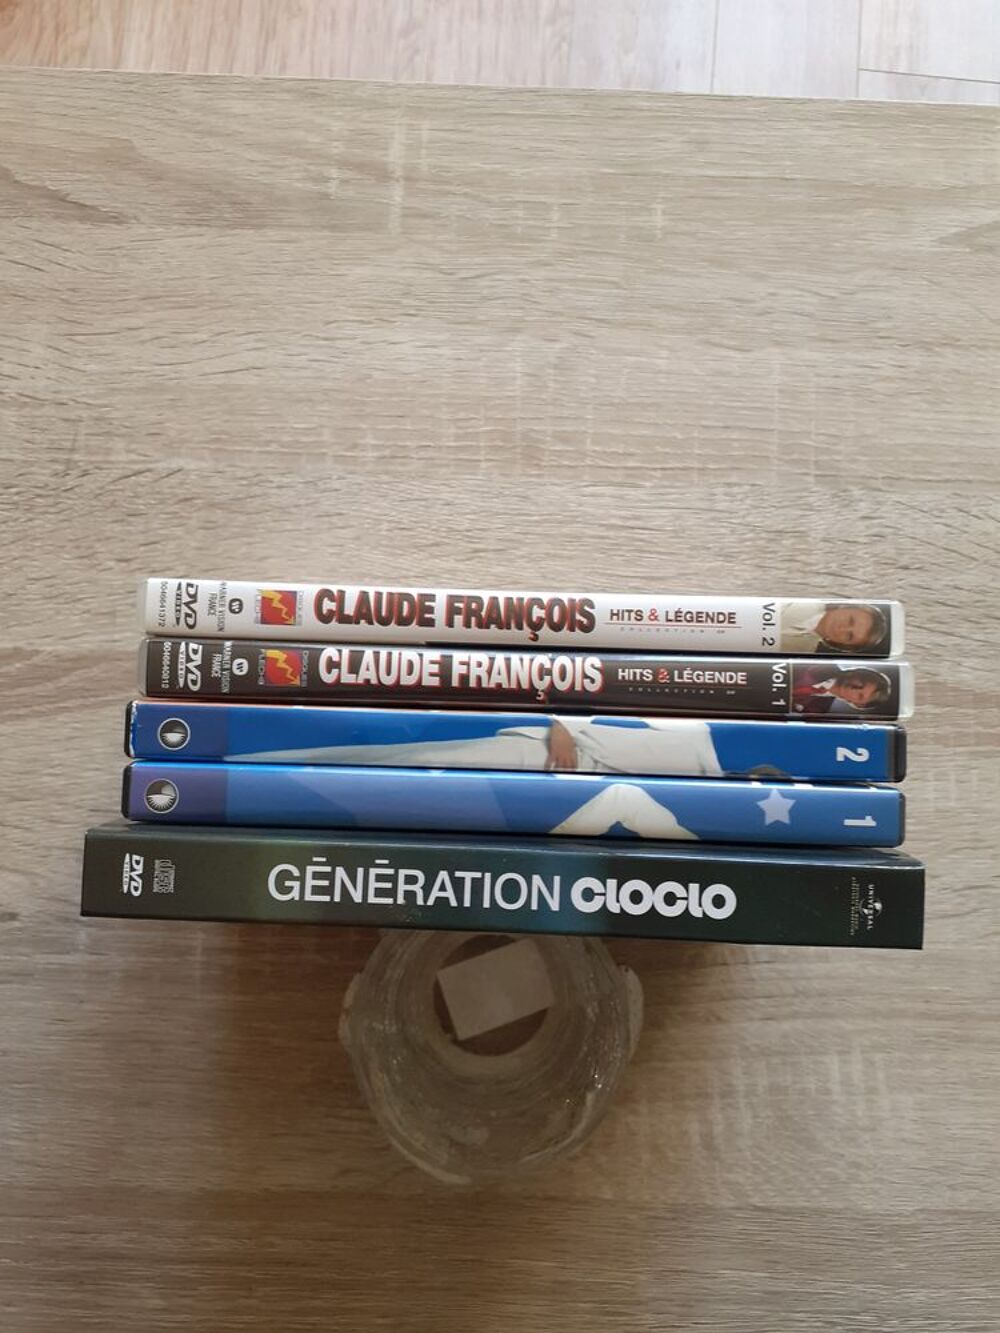 6 DVD - CLAUDE FRANCOIS DVD et blu-ray